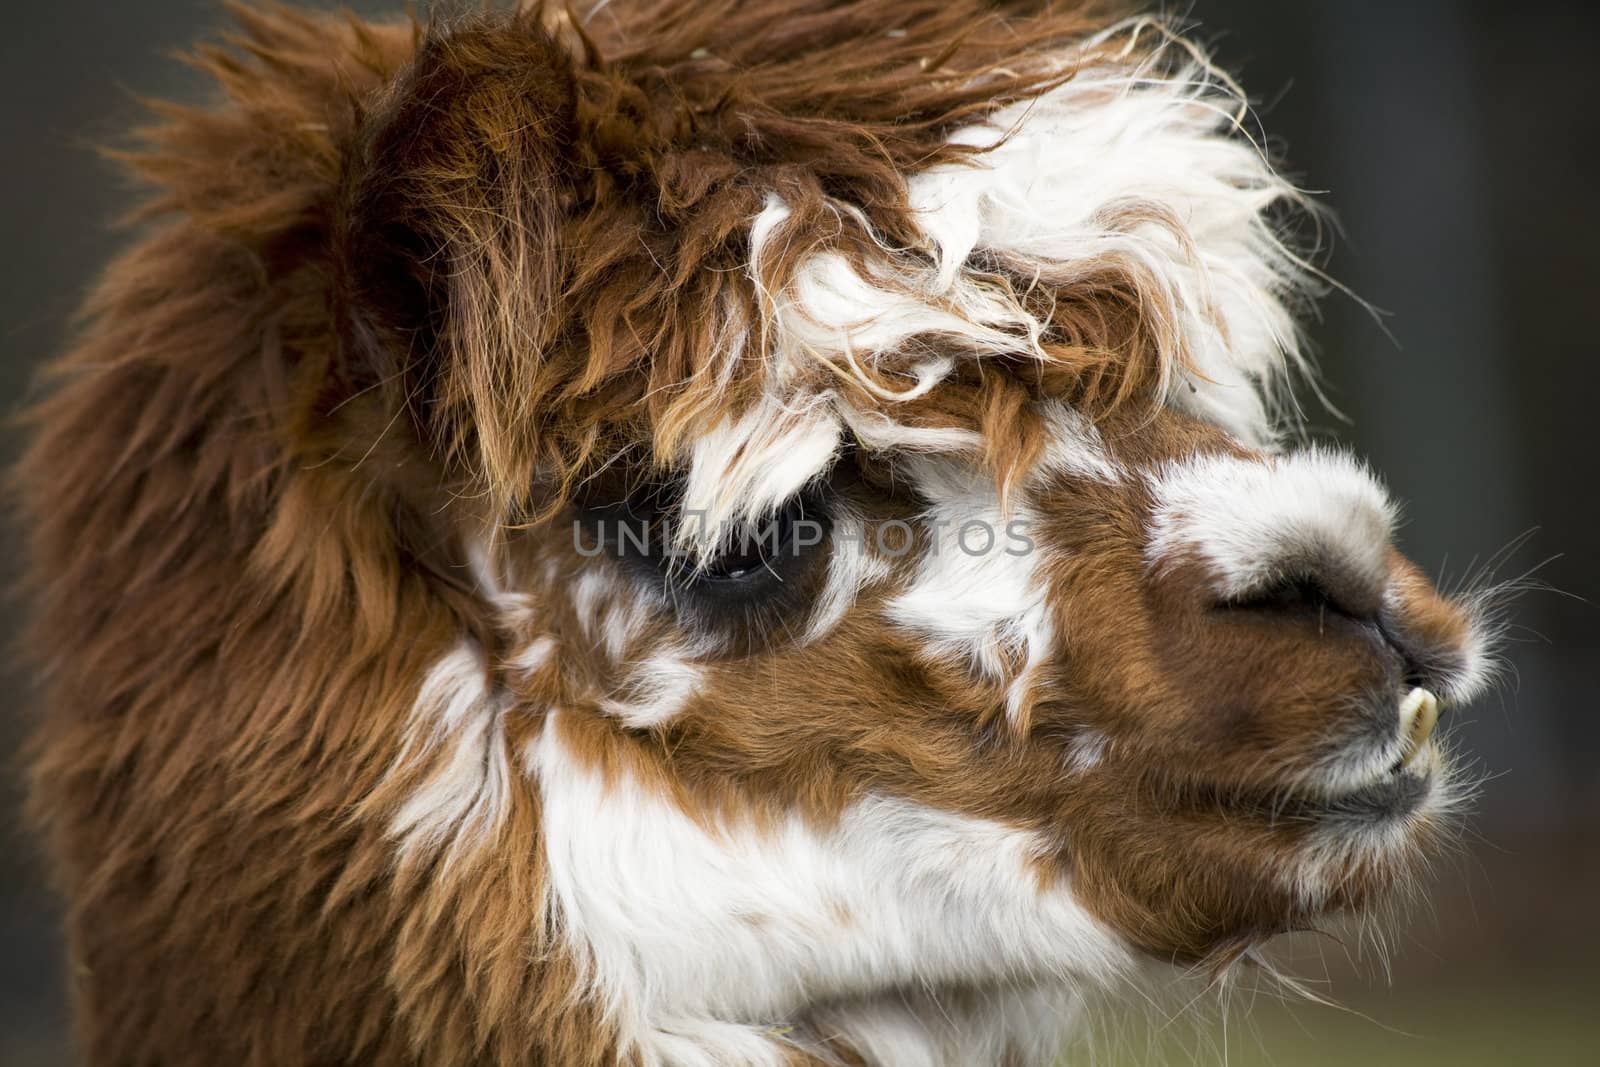 Calico Llama Alpaca face Close Up by bill_perry